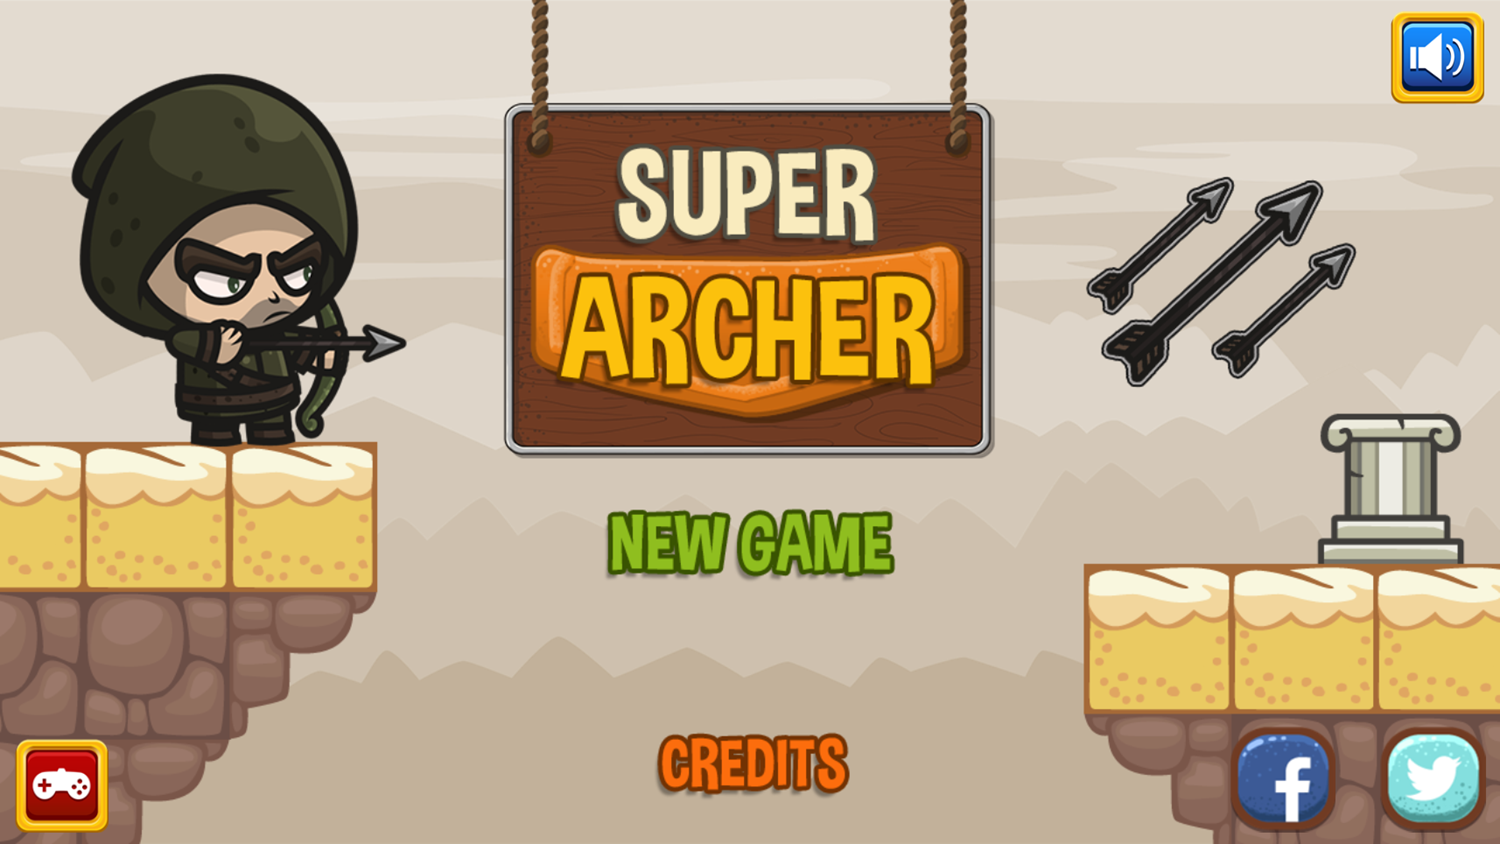 Super Archer Game Welcome Screen Screenshot.